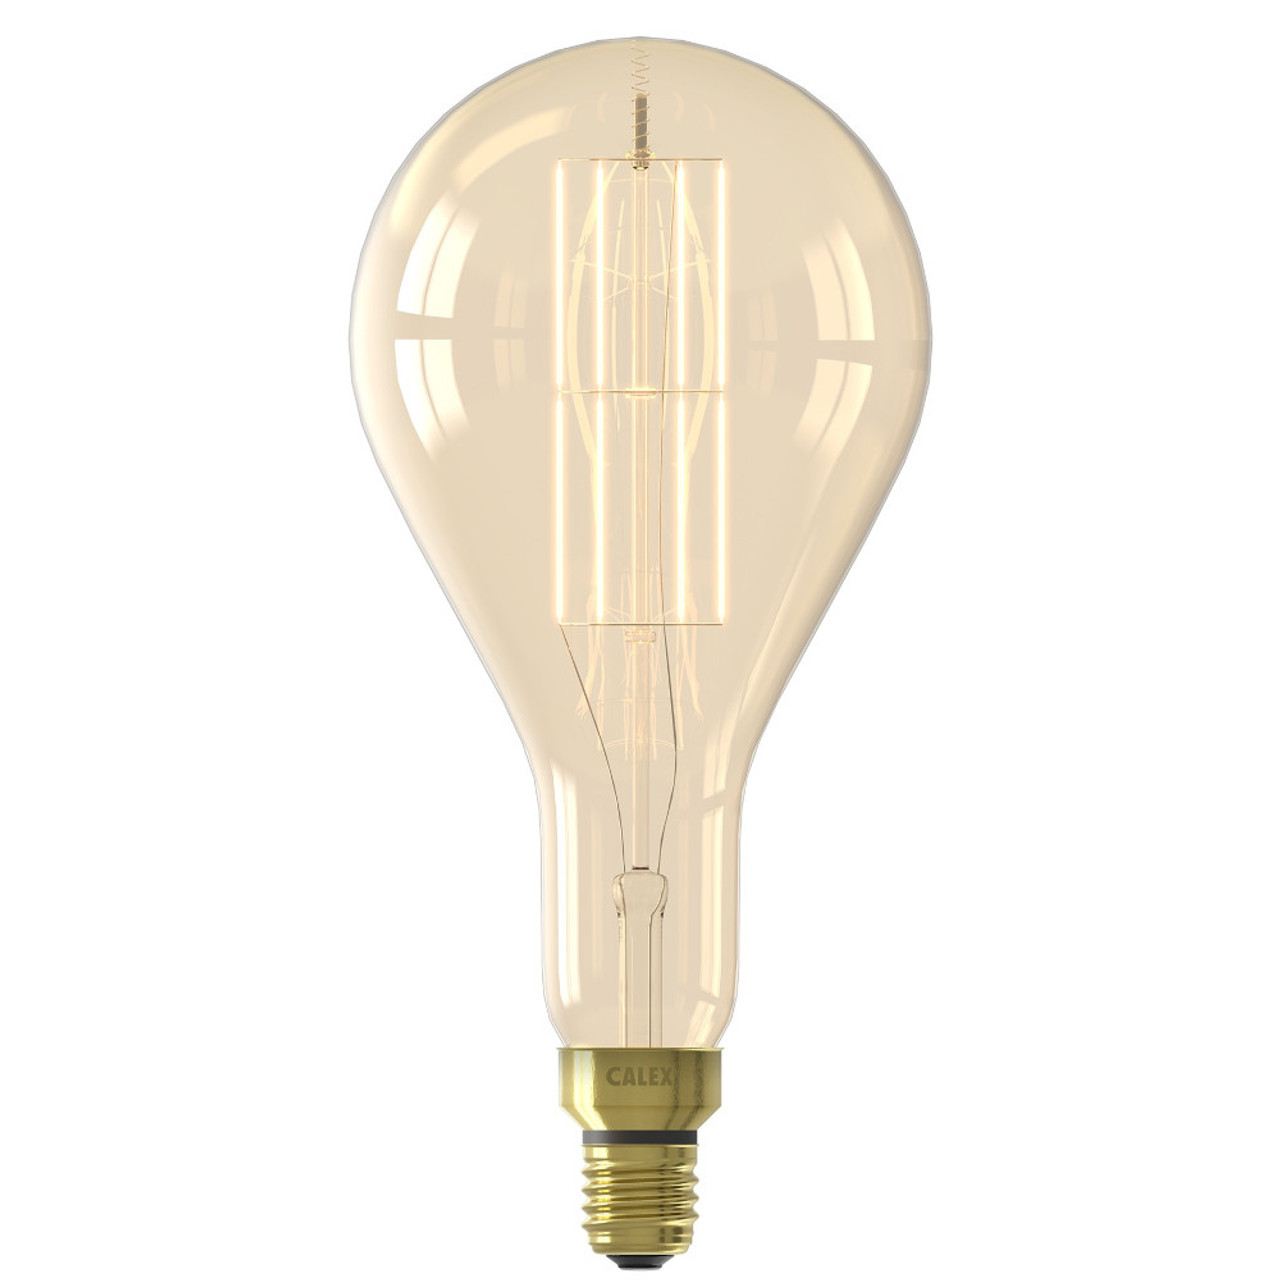 Calex LED Filament Splash Lamp 240V 10.5W E27 Gold 2100K Dimmable